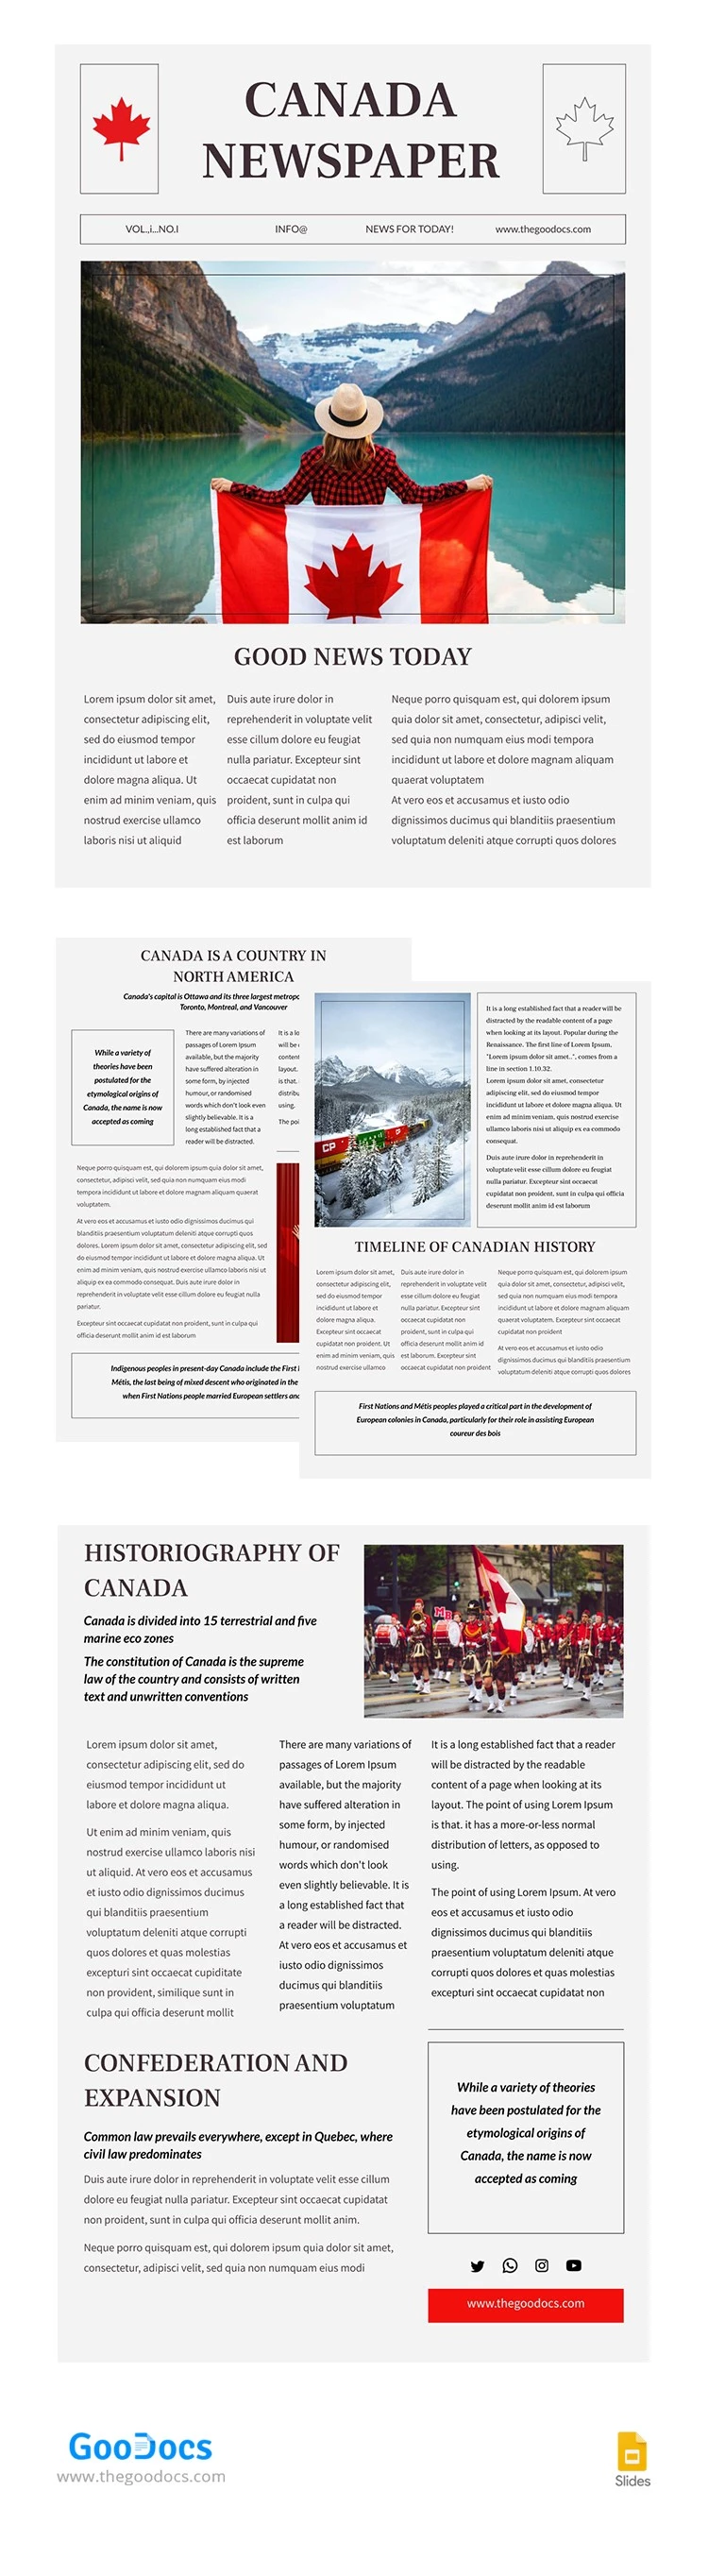 Kanadische Zeitung - free Google Docs Template - 10065739